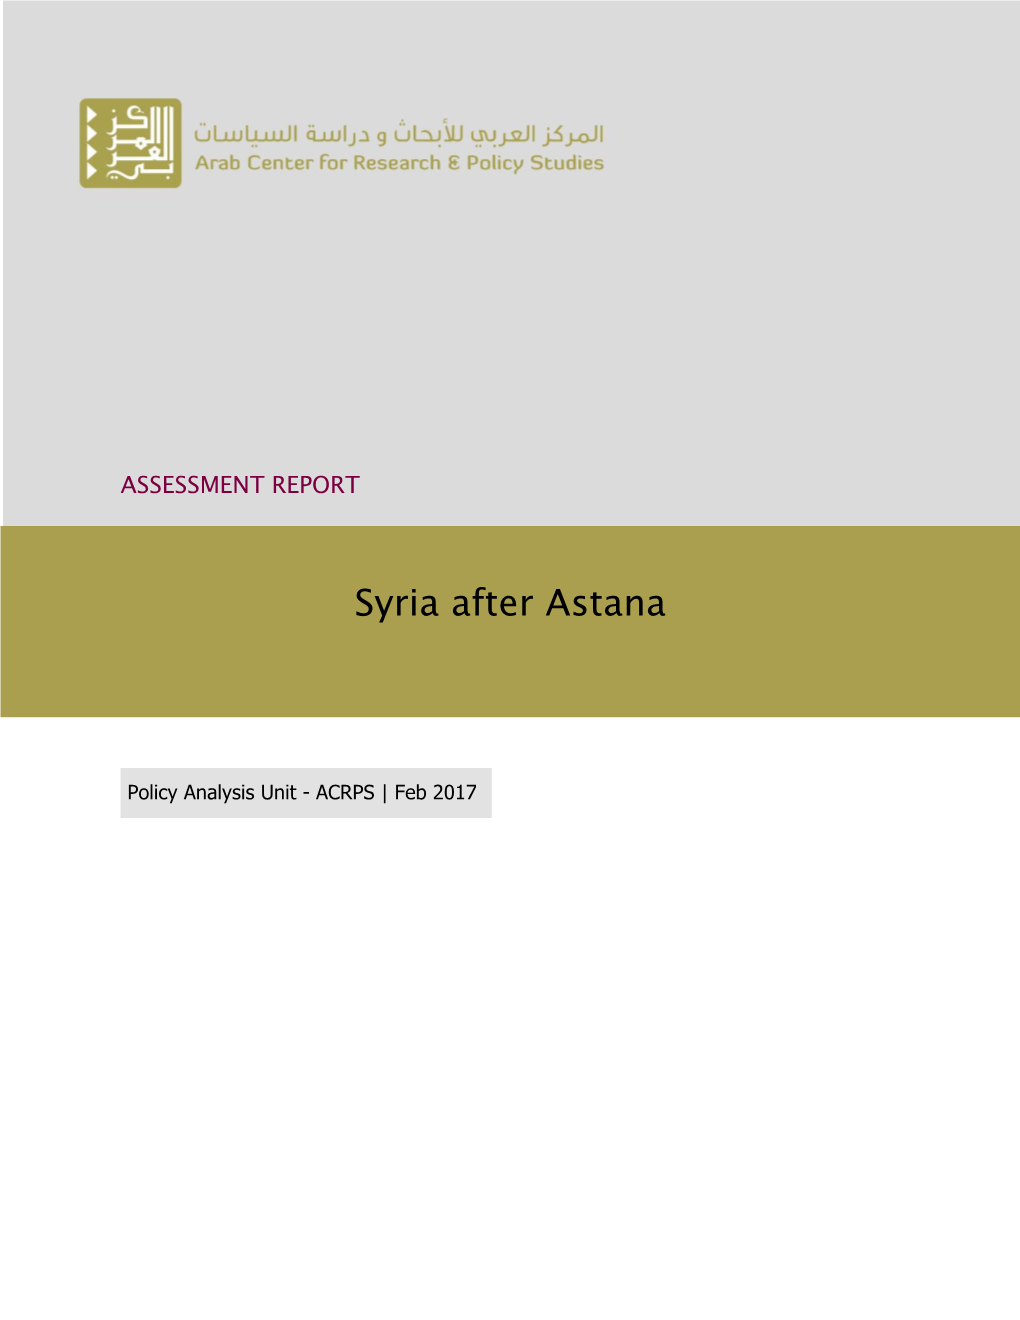 Syria After Astana